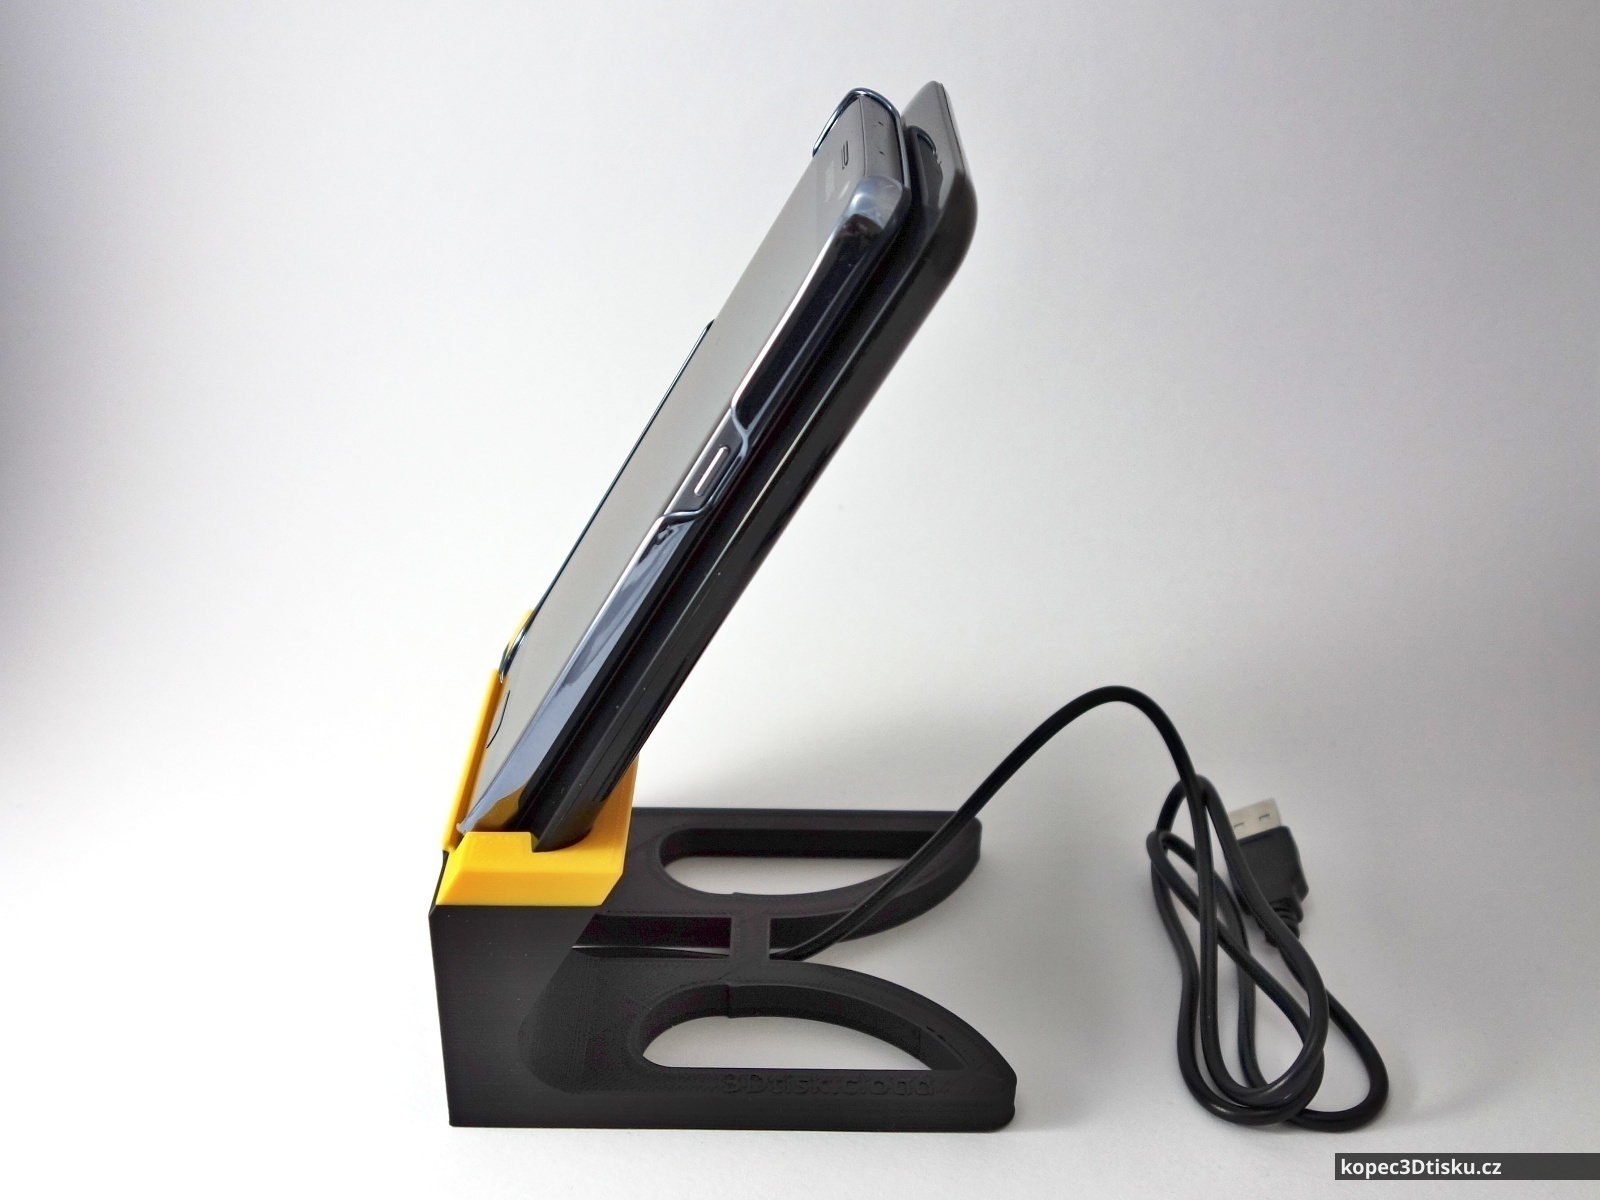 3D Printed Tom's Samsung Galaxy S7 + Qi charger stand by Tom Vít